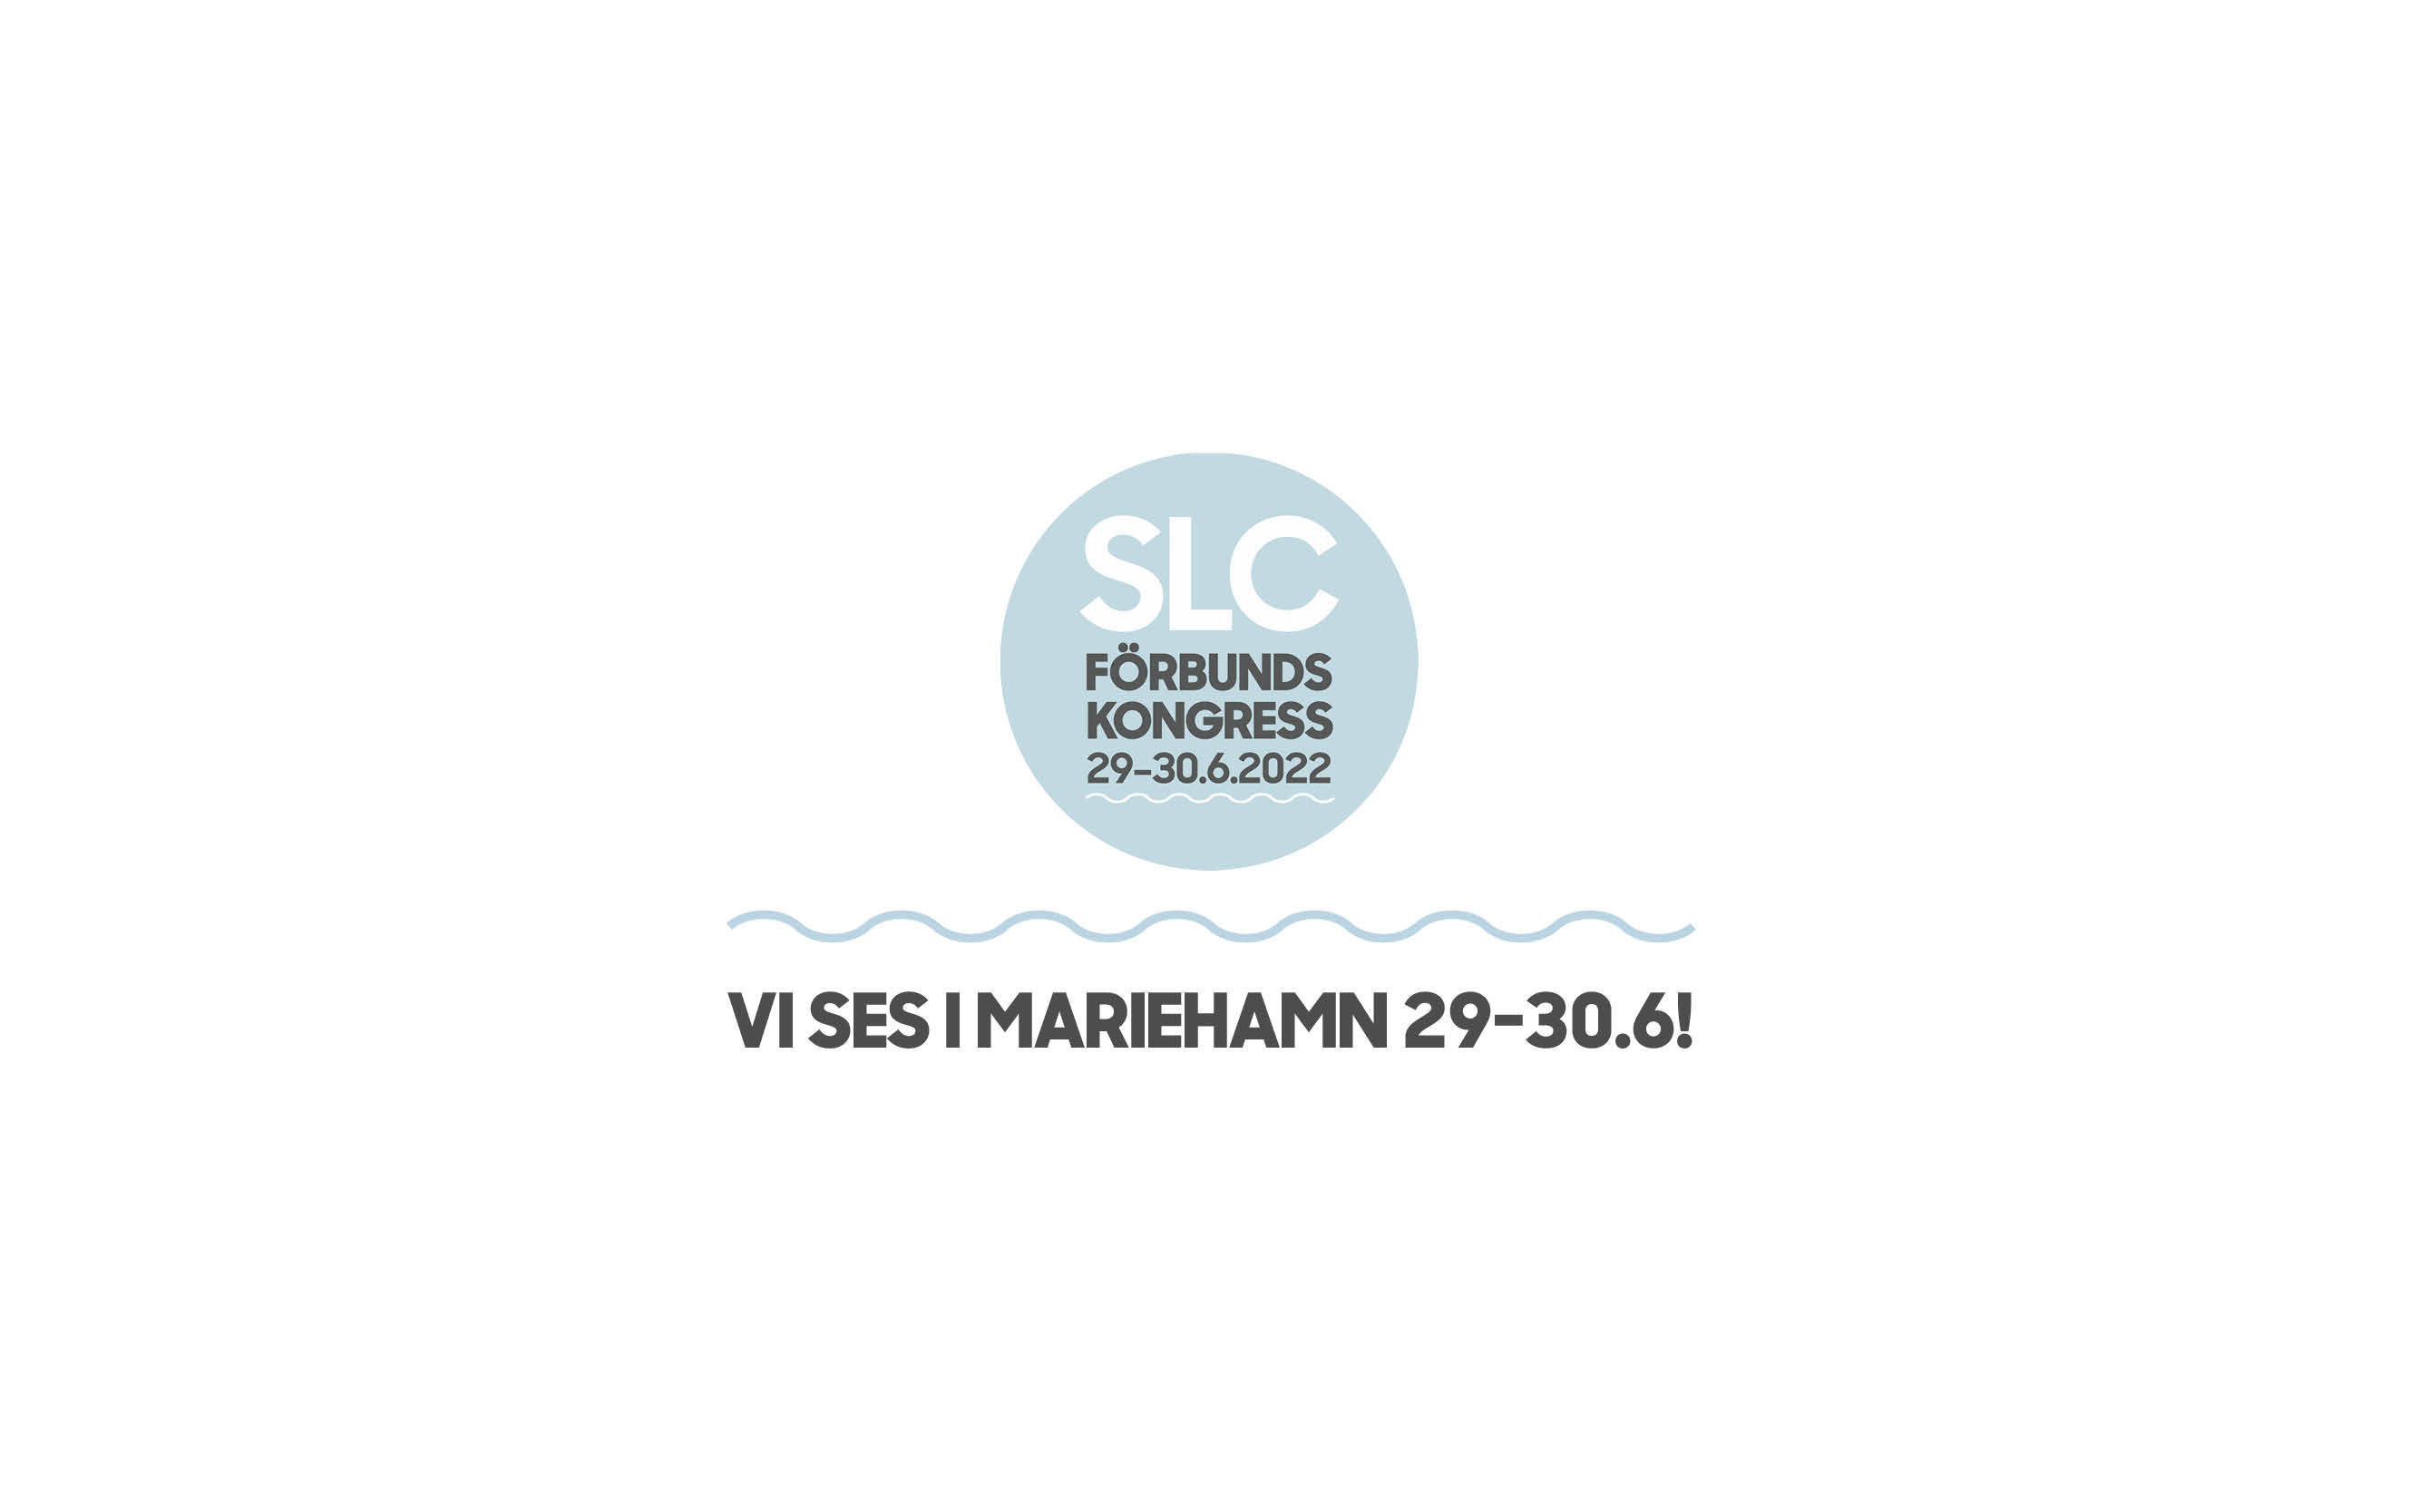 SLC - Kongress 2022 webb vi ses i mariehamn